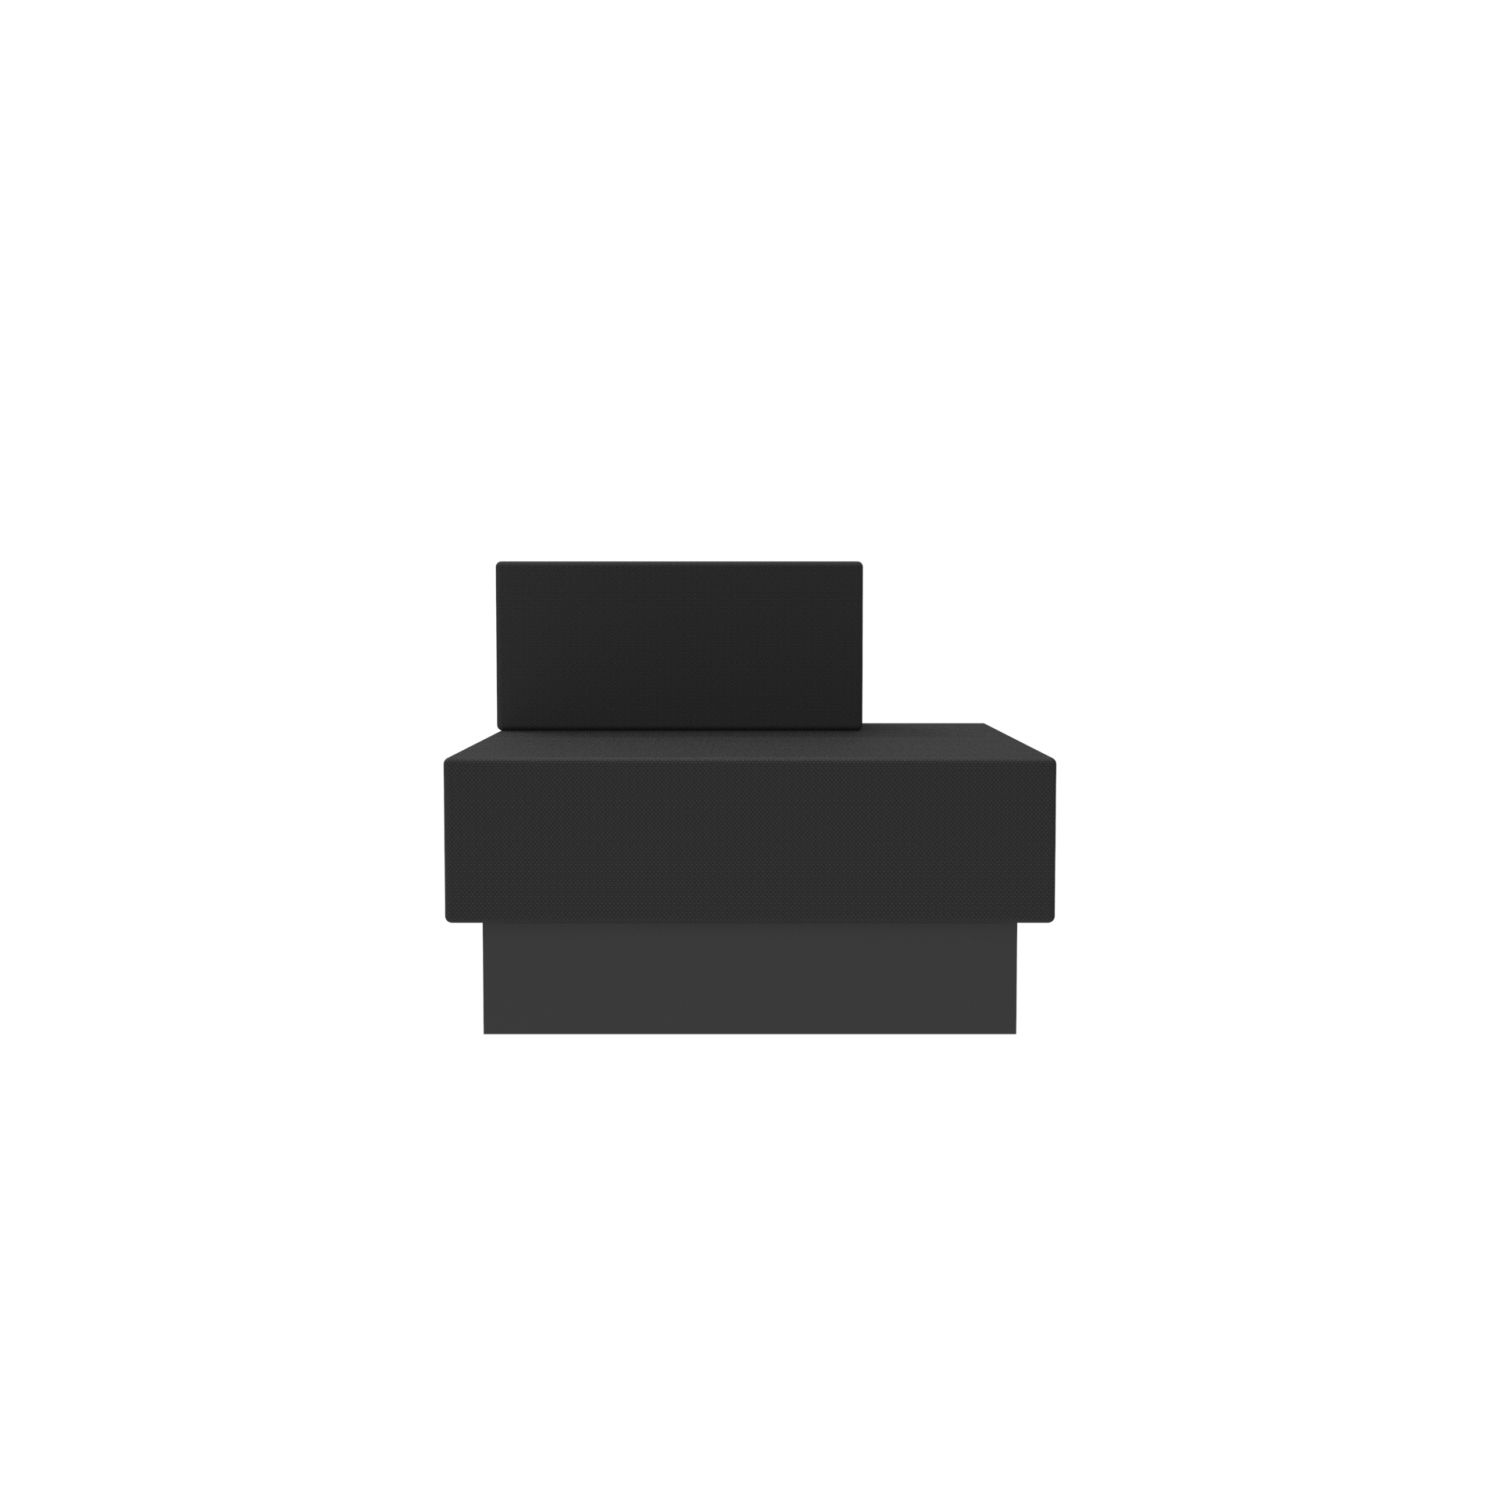 lensvelt oma blocks lounging edition closed base with backrest right 90 cm width havana black 090 black ral9005 hard leg ends